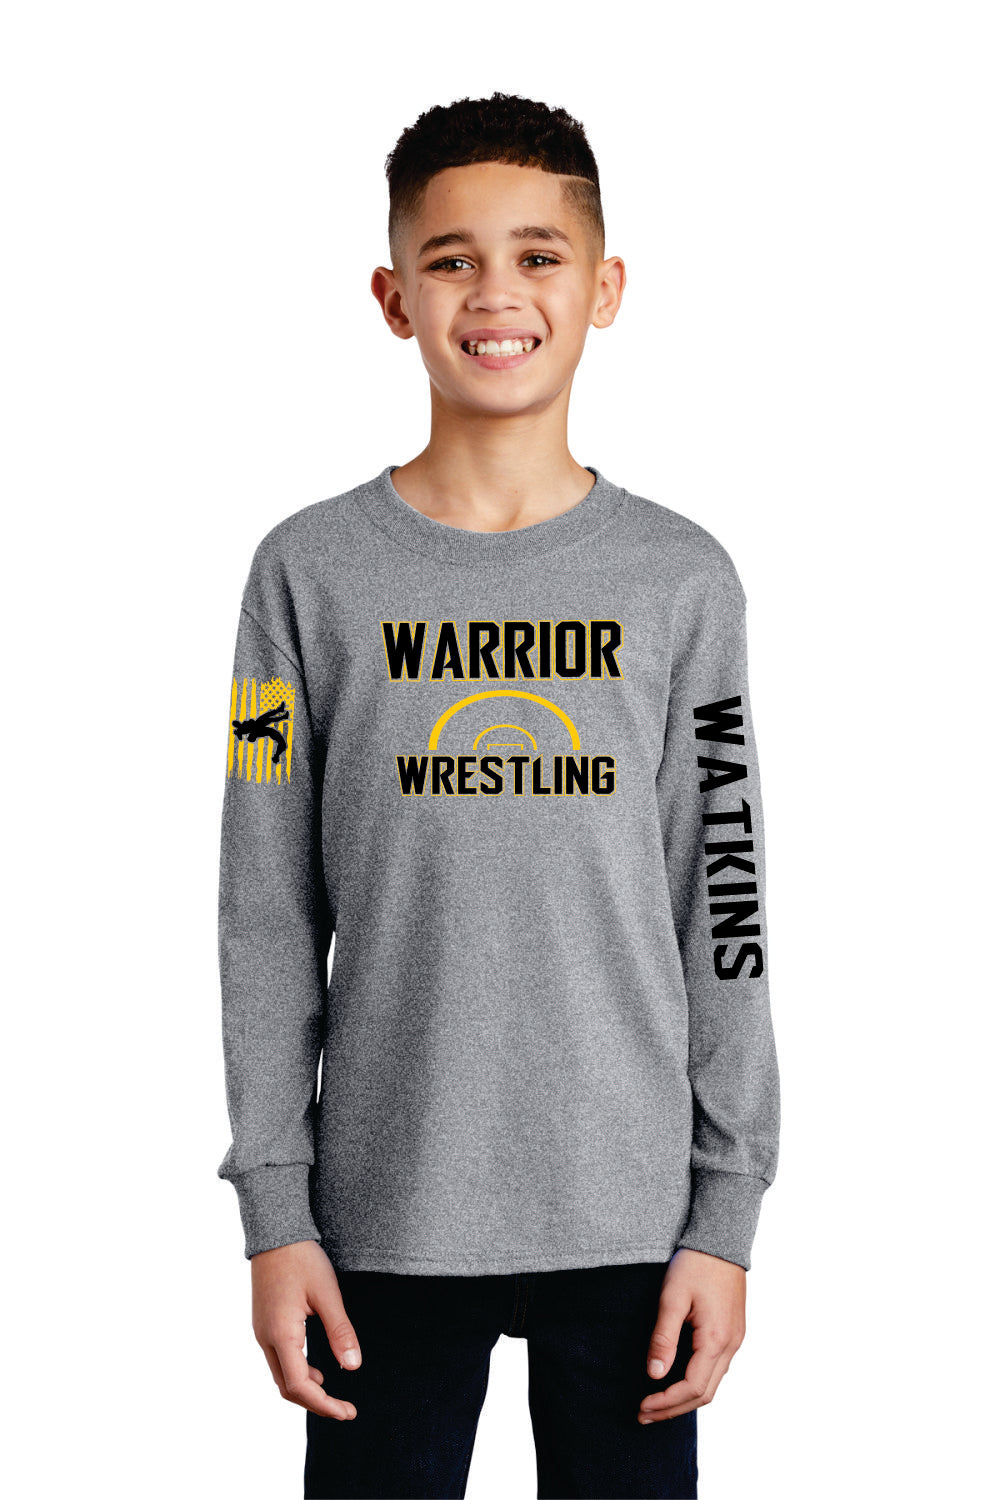 Warrior Wrestling Half Mat Long Sleeve Tee - Youth & Adult